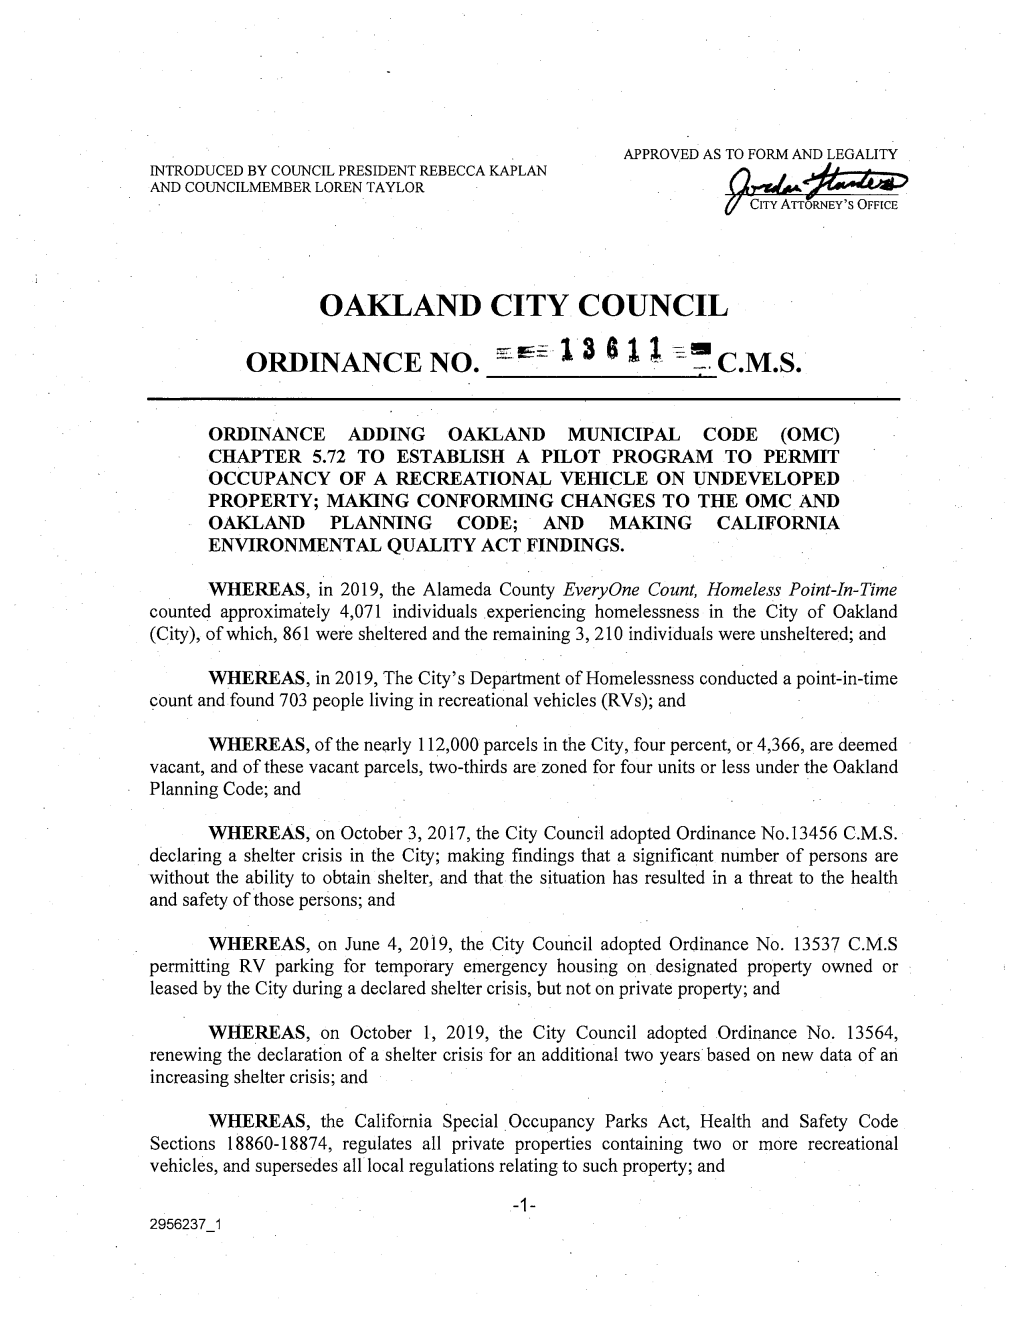 Oakland City Council Ordinance No. E 13 011~ C.M.S